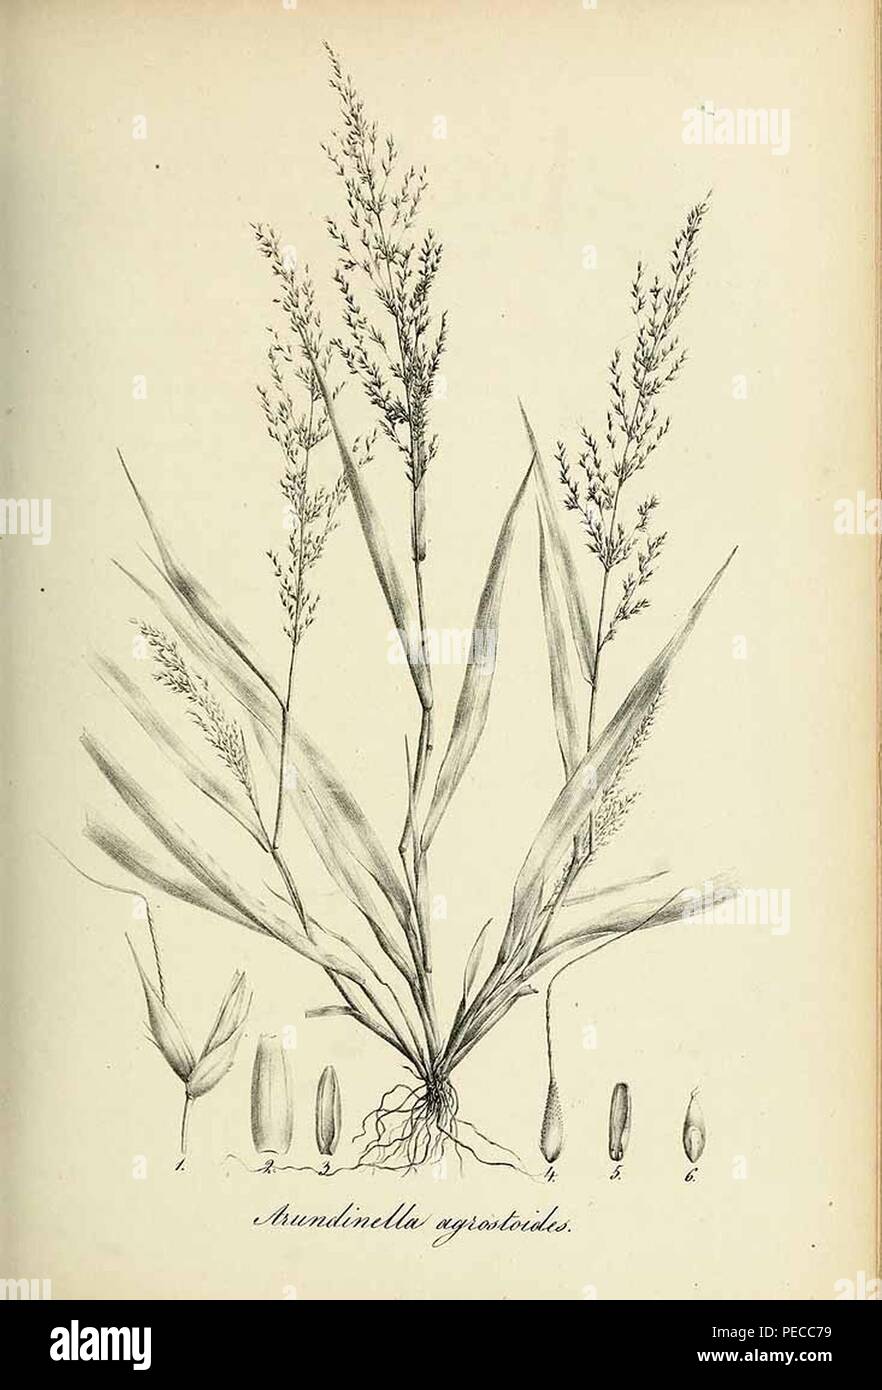 Arundinella agrostoides - Species graminum - Volume 3. Stock Photo